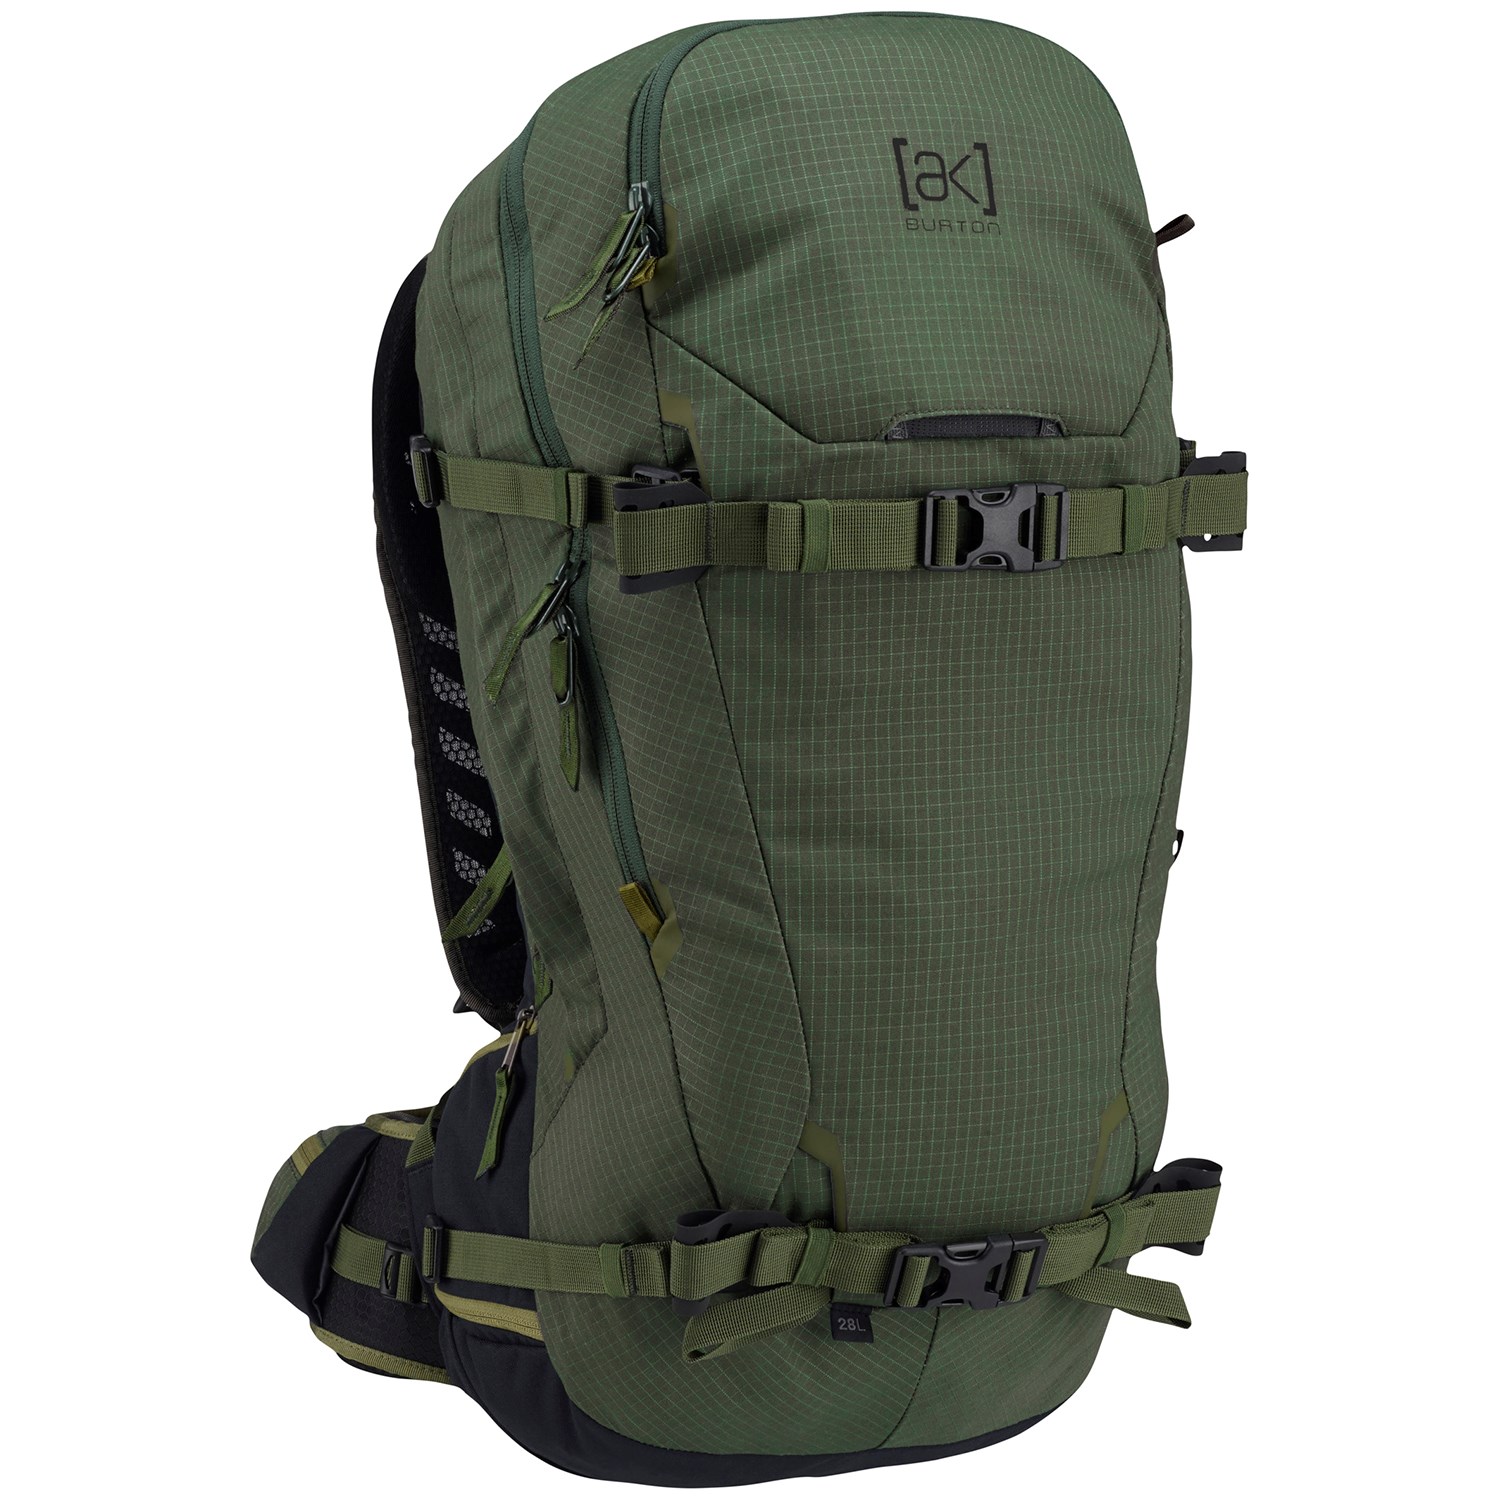 Burton AK Incline 30L Backpack | evo